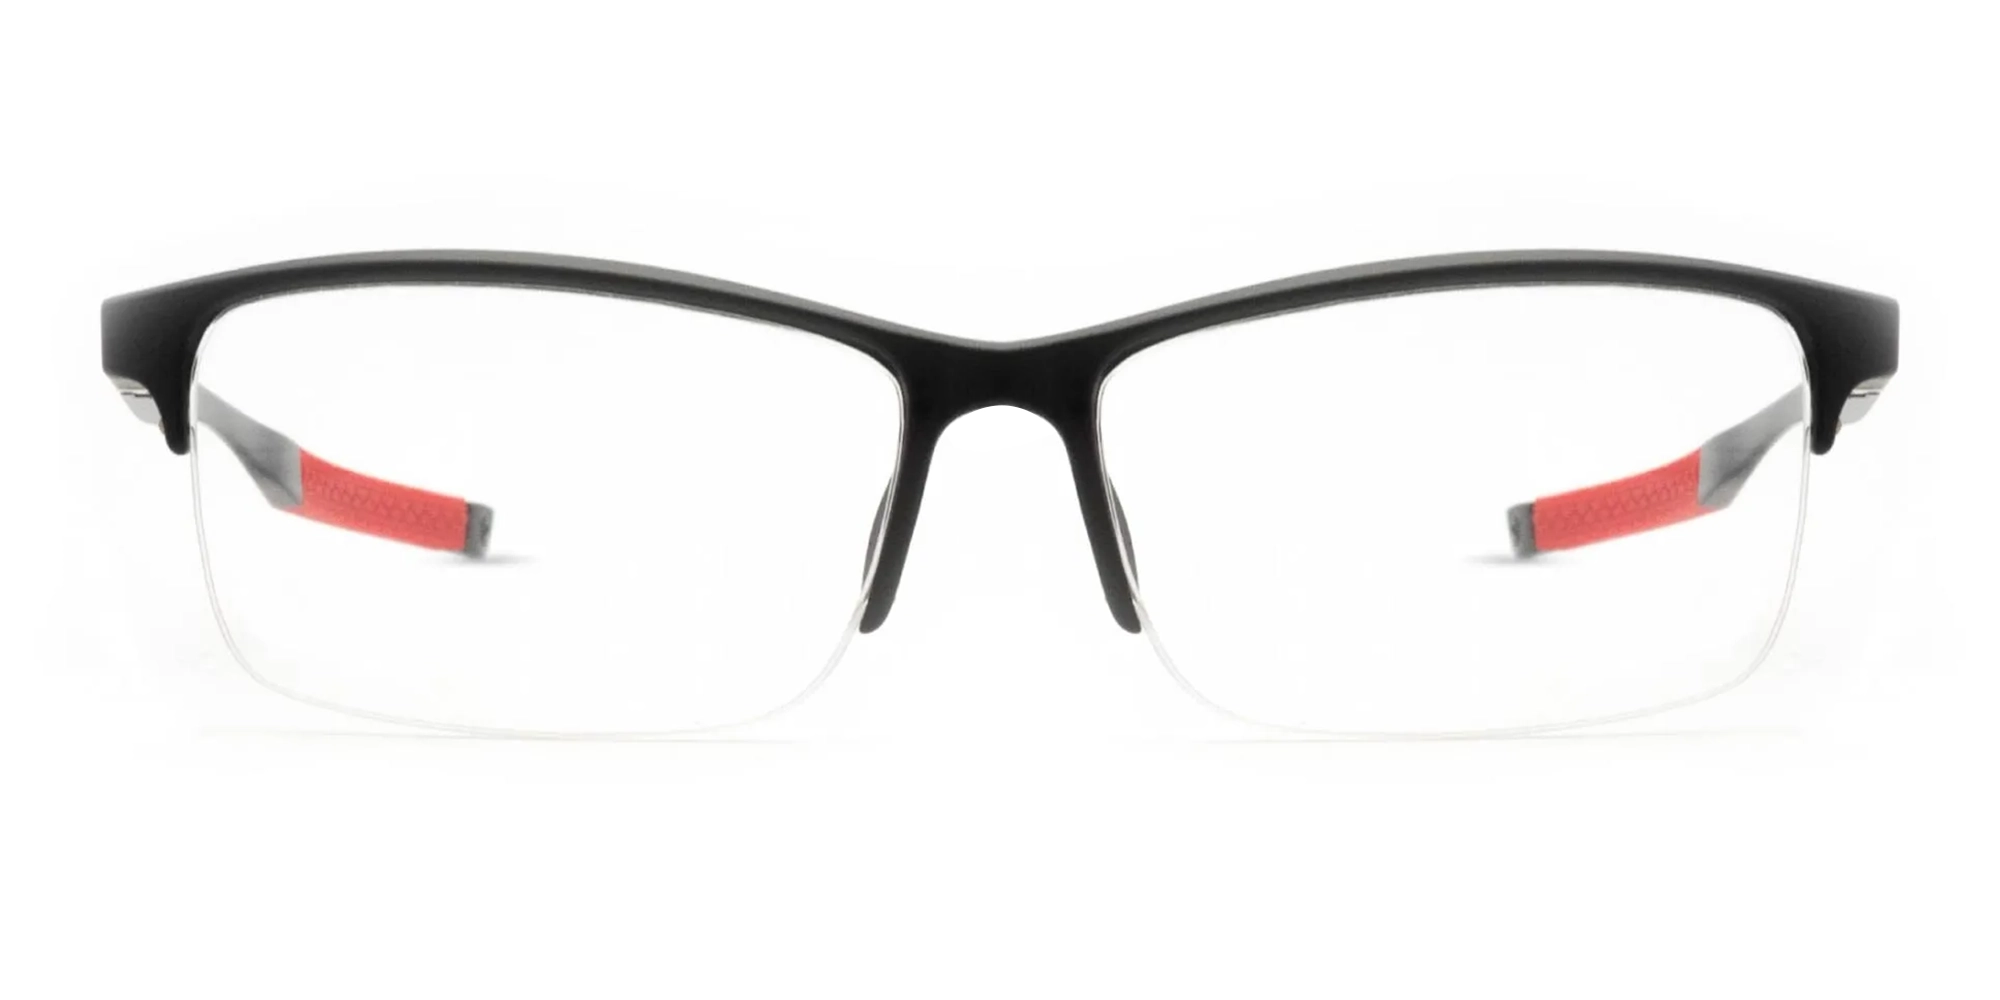 Rx Cycling Glasses-2